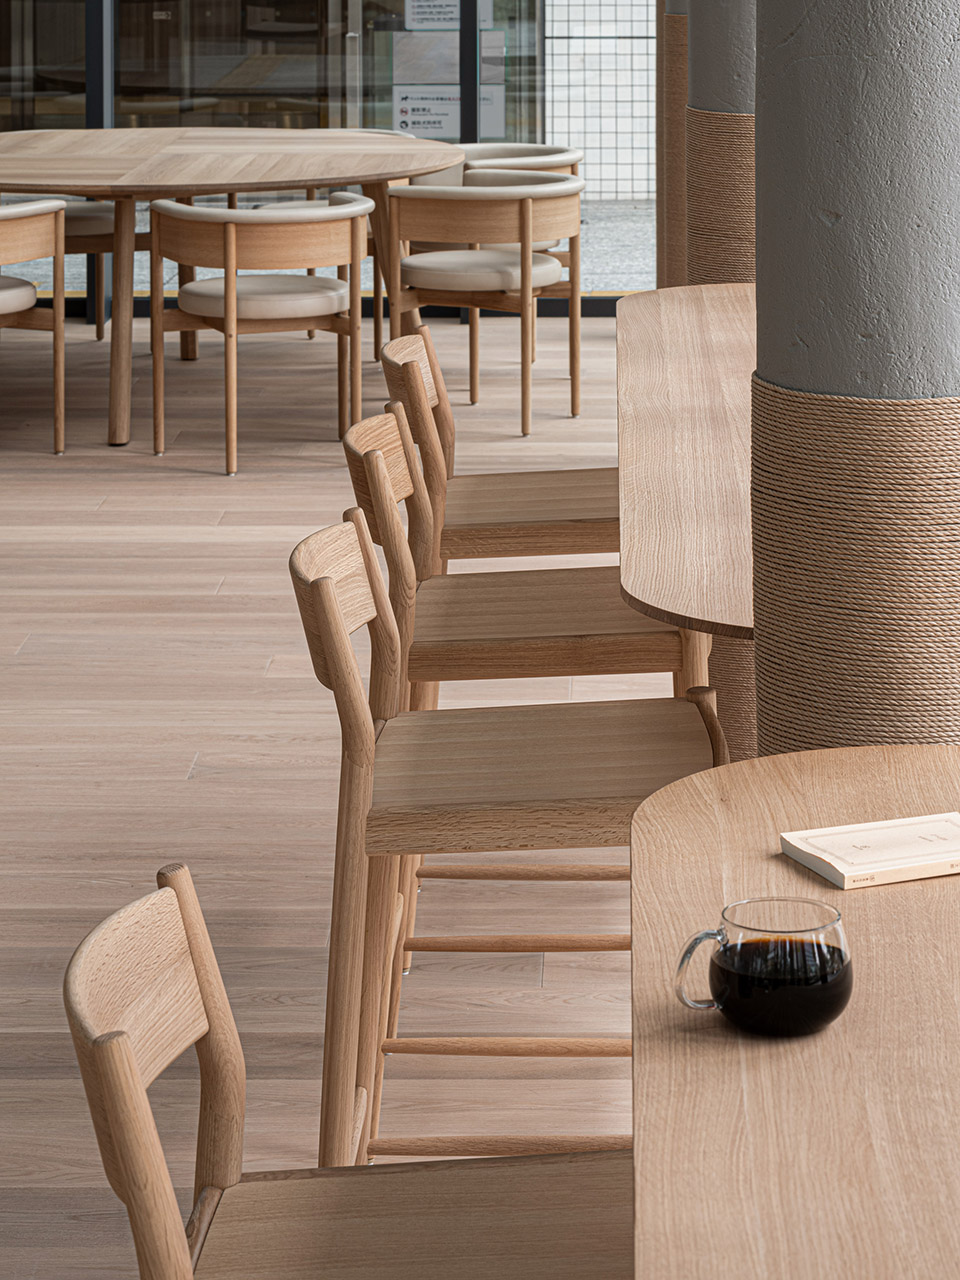 Blue Bottle咖啡港未来店，东京/科技与工艺结合的木制家具-72